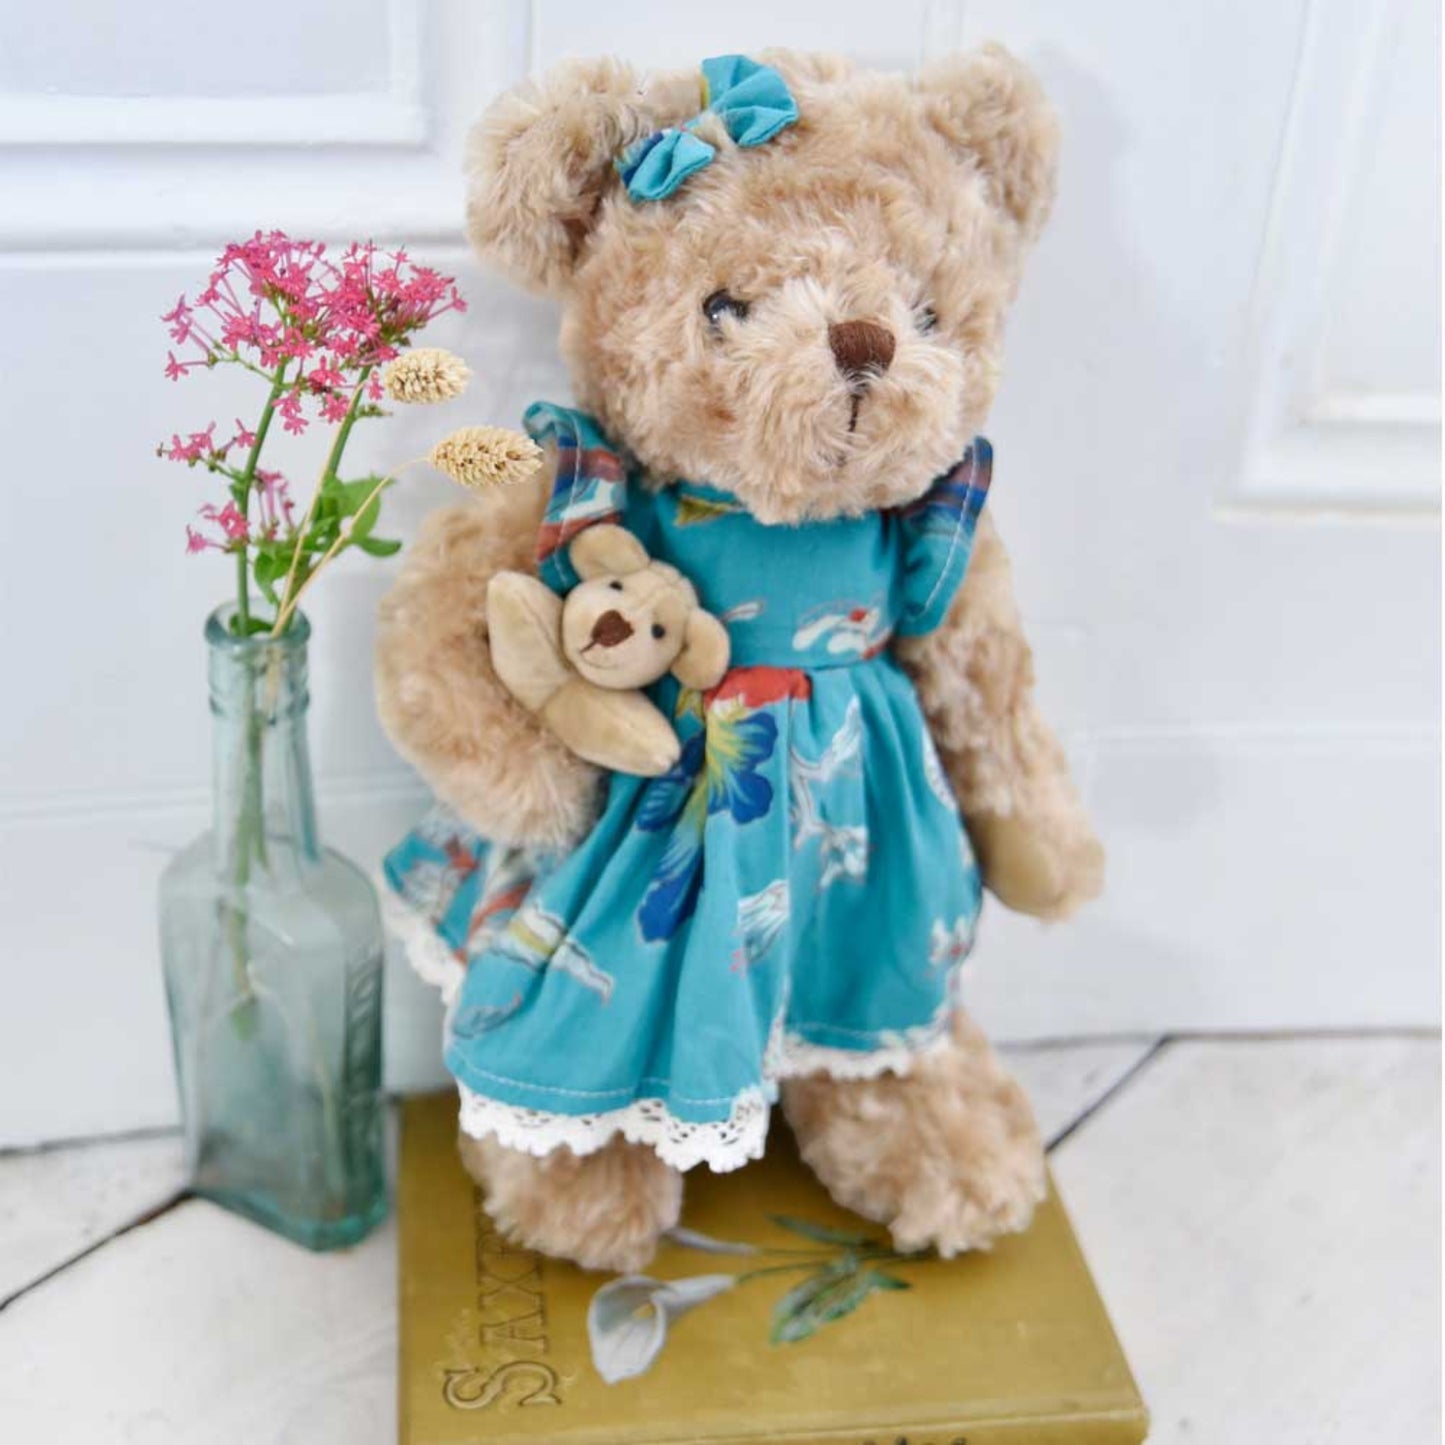 Teddy In A Teal Dress